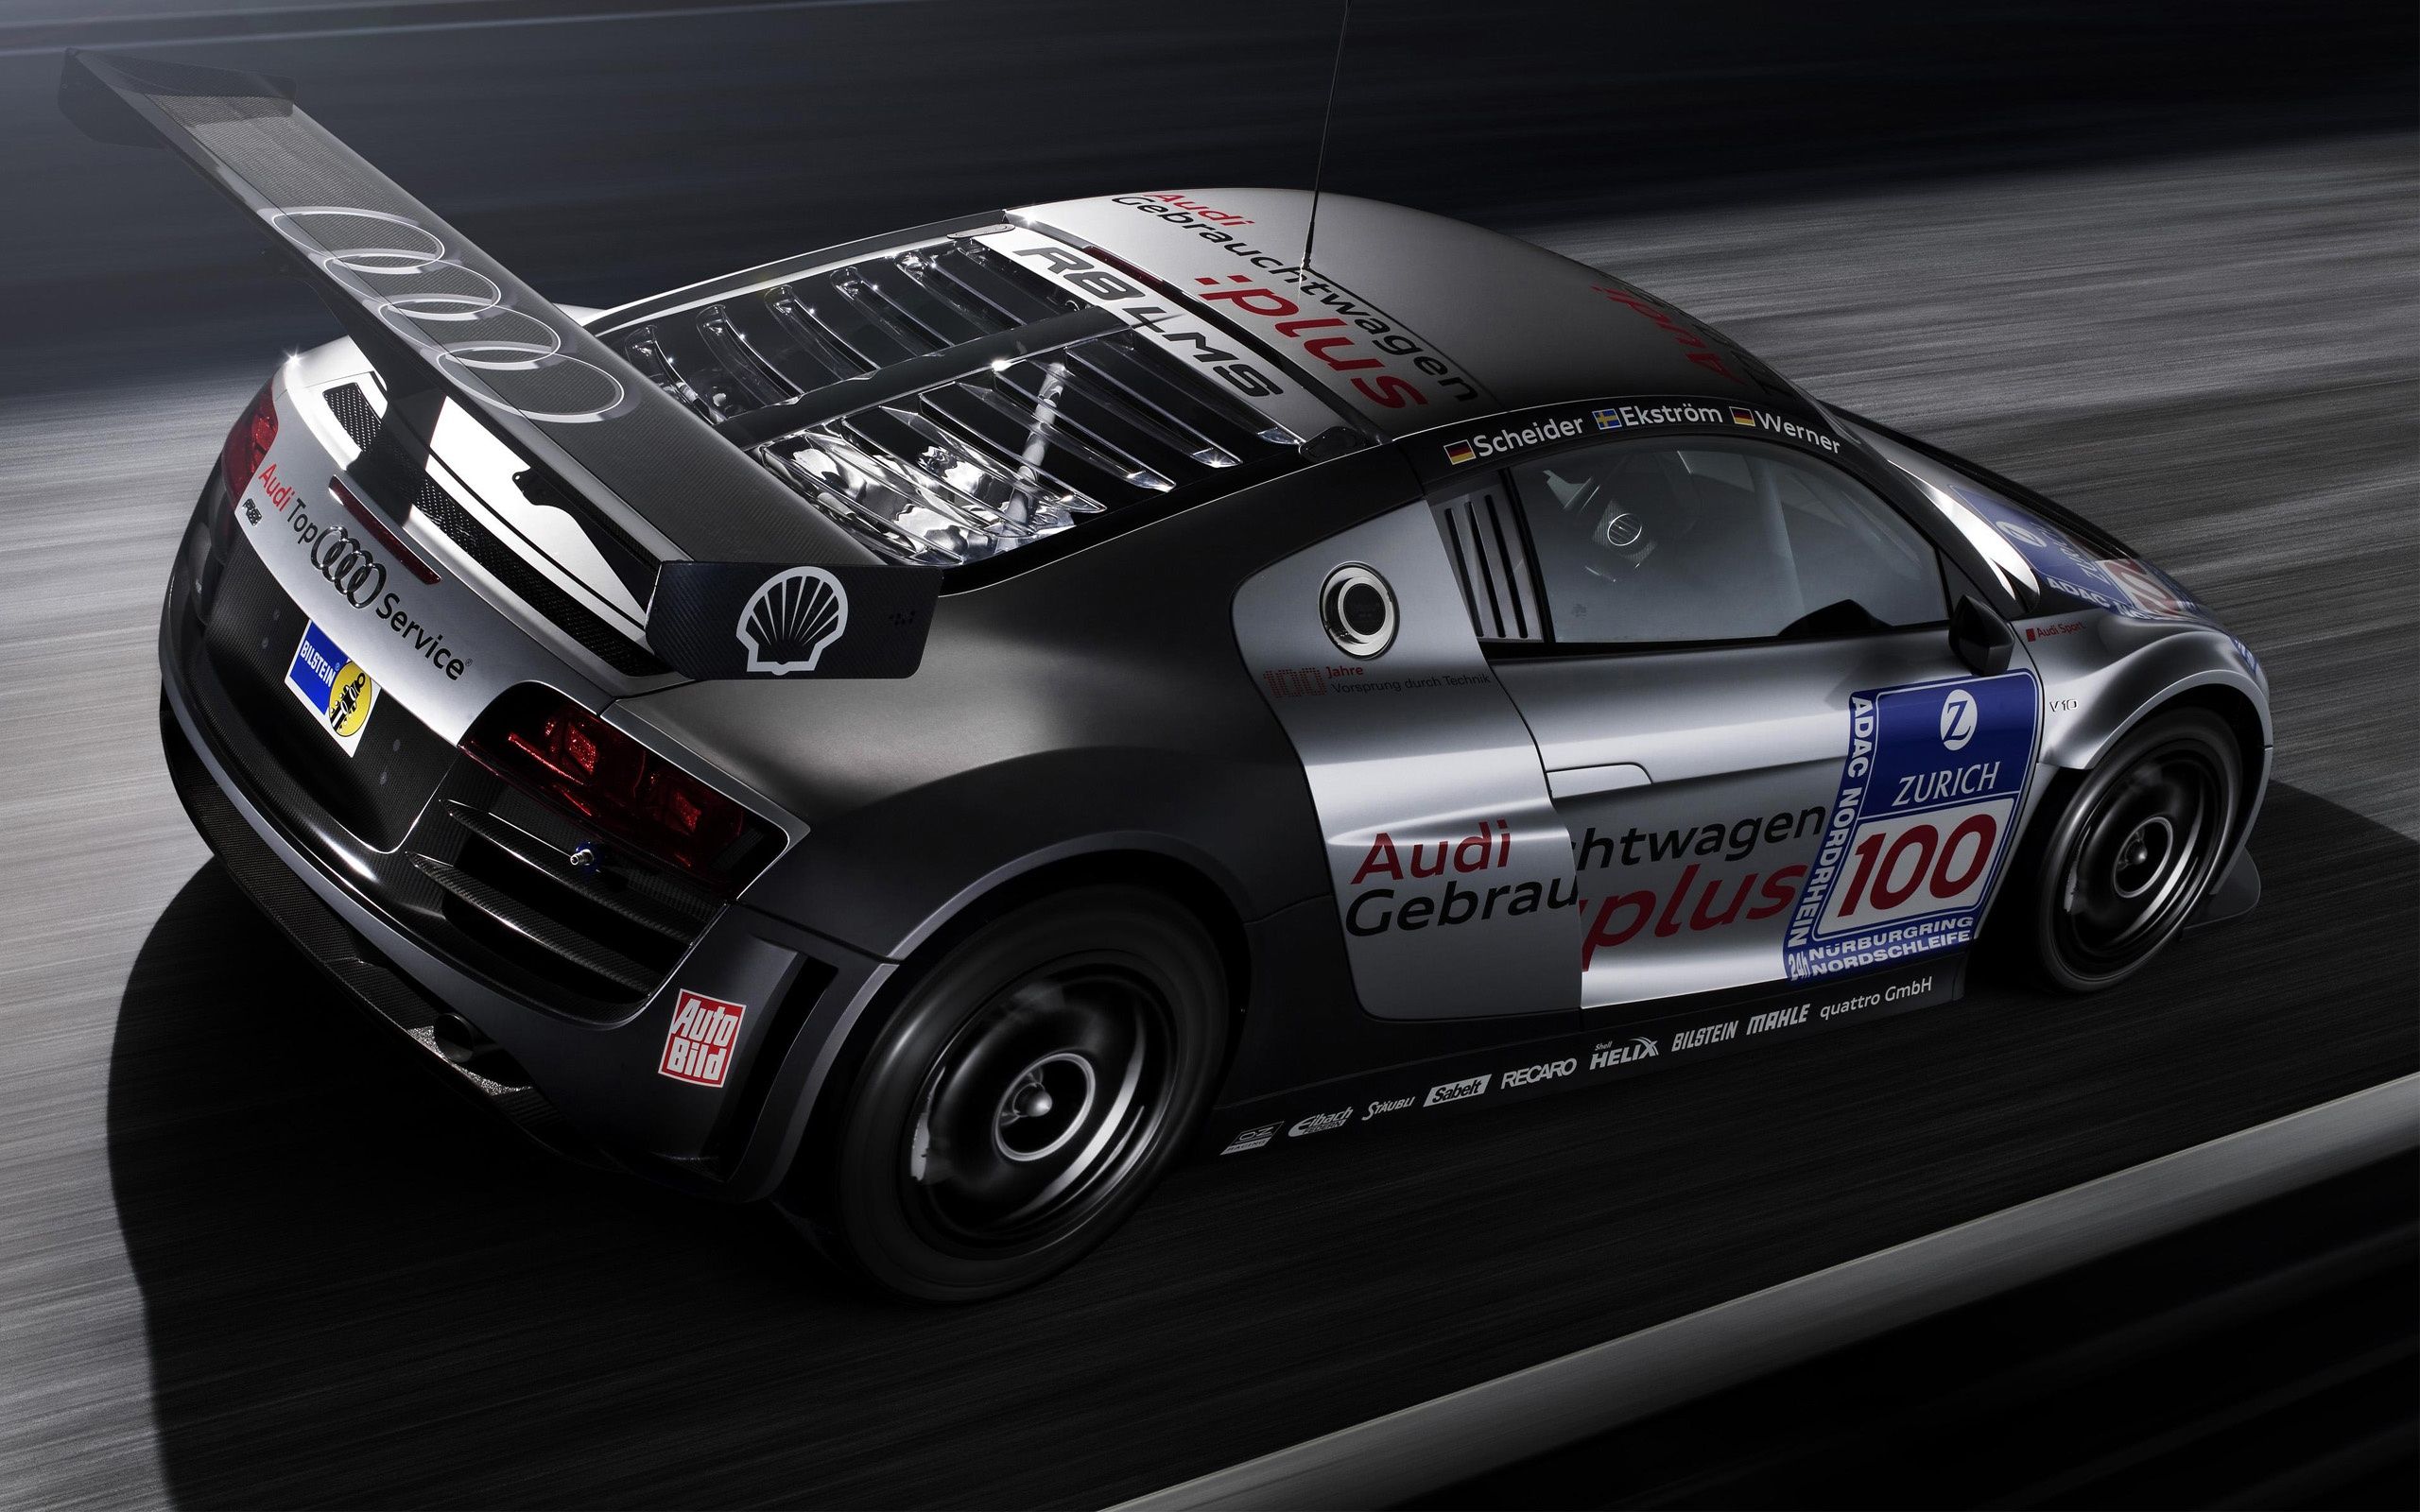 Audi R8 Sport Wallpaper in jpg format for free download